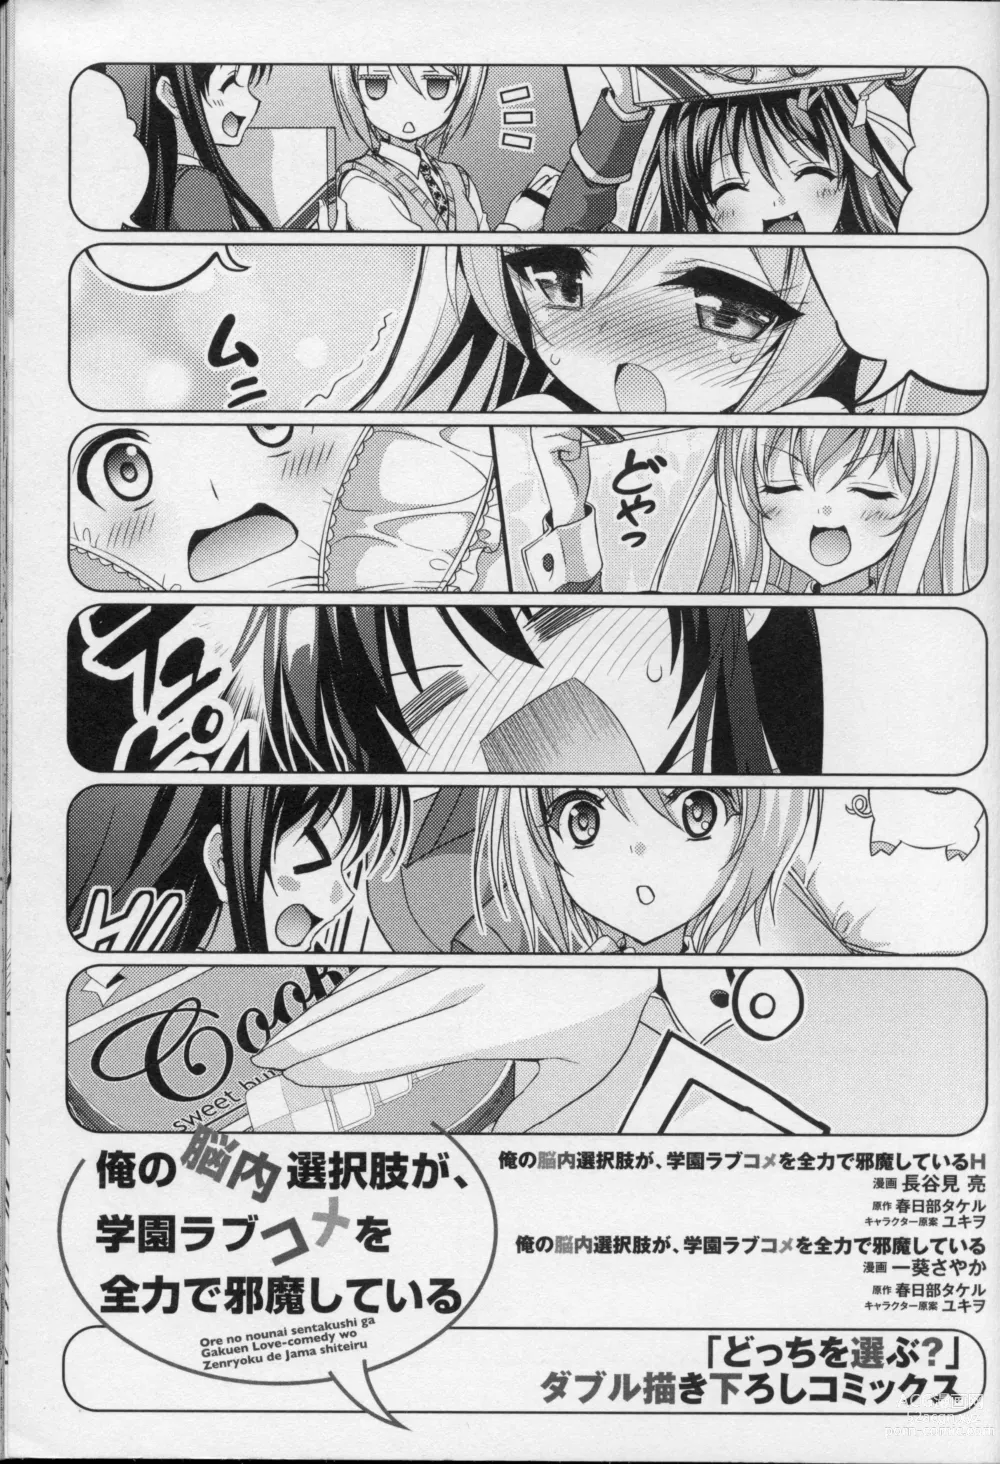 Page 4 of manga 「どっちを選ぶ?」ダブル描き下ろしコミックス Blu-ray＆DVD 第2巻 同梱特典